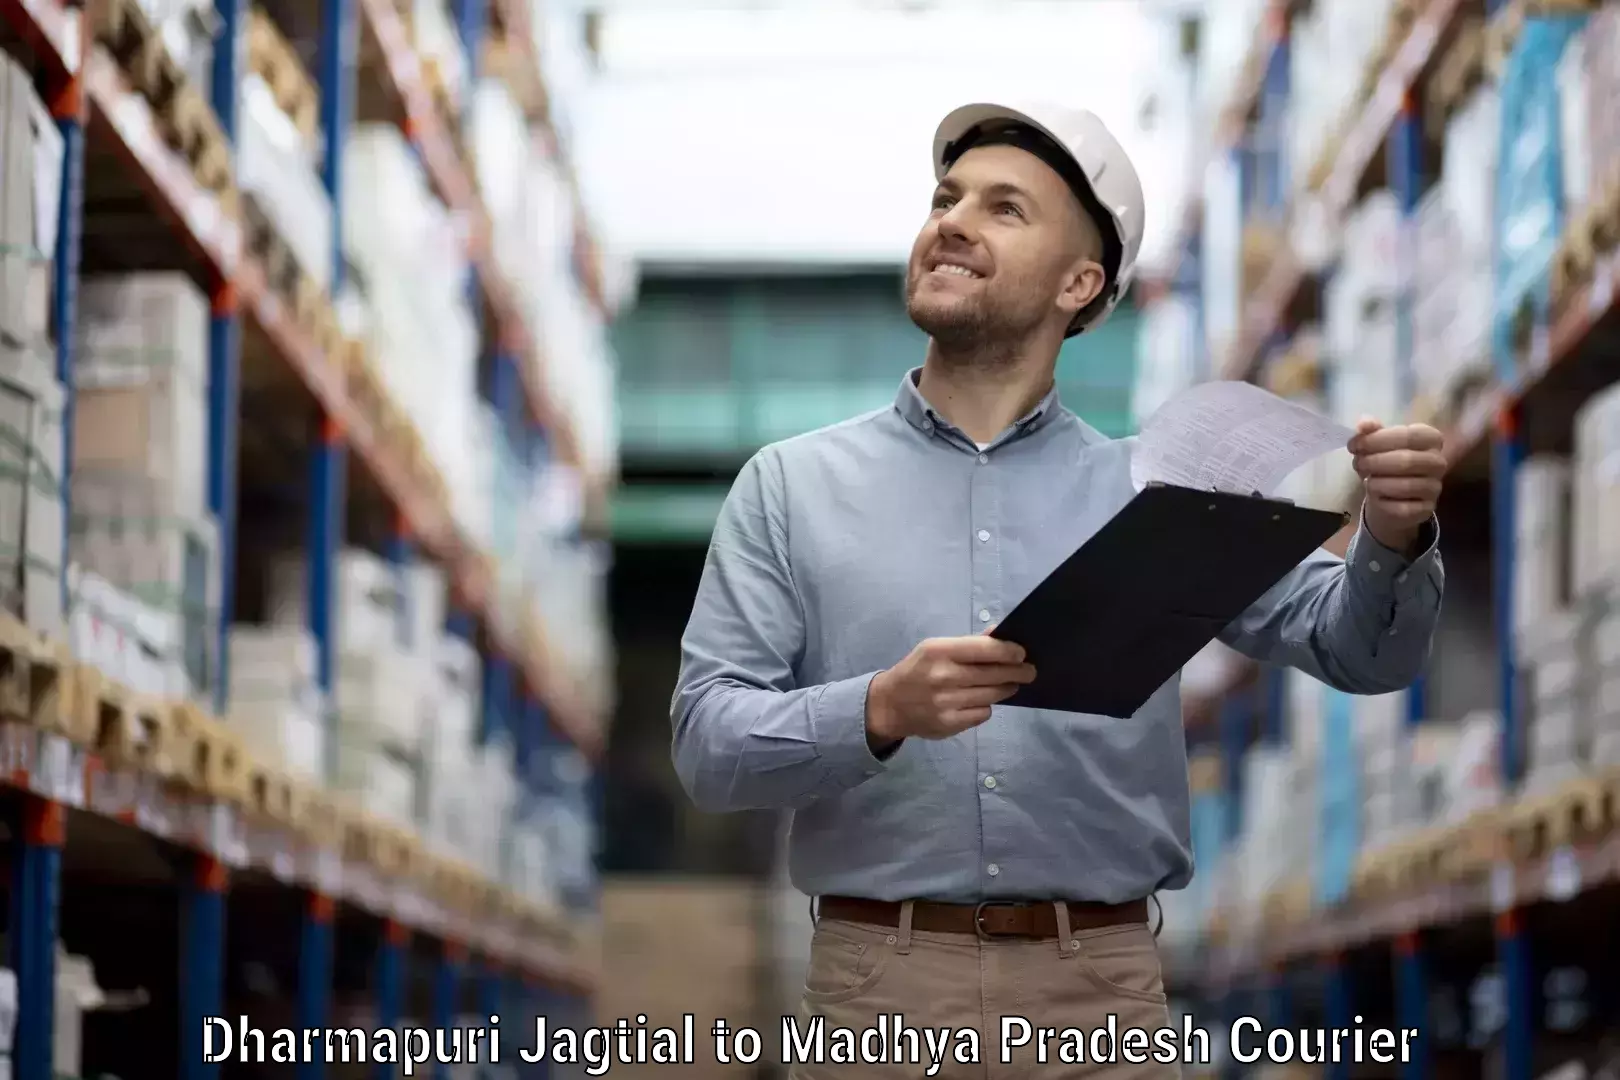 Reliable delivery network Dharmapuri Jagtial to Mungaoli